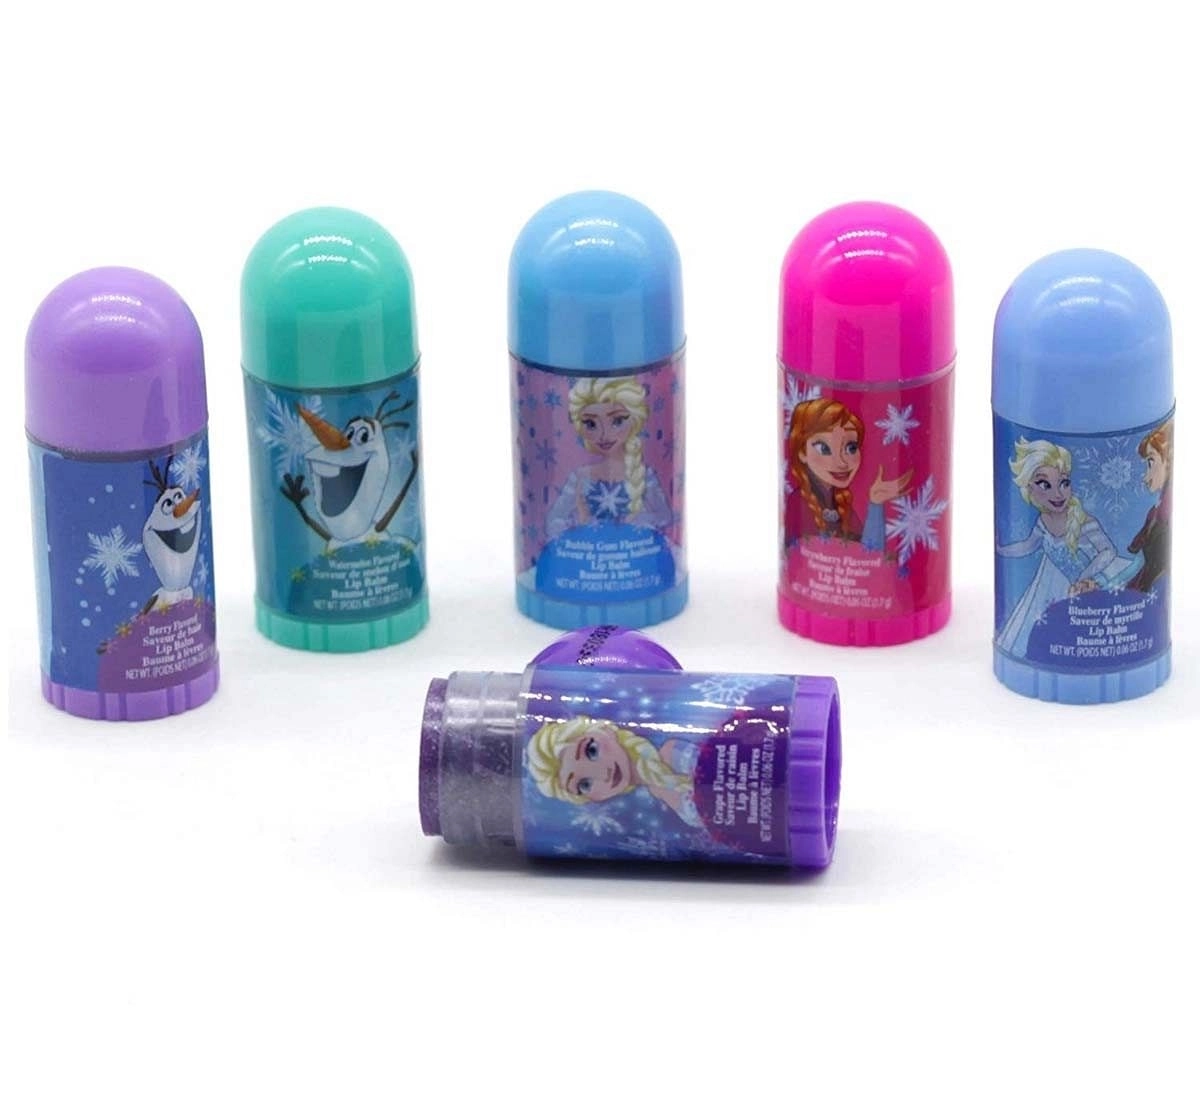 Disney Frozen Townley Girl Lip Balm Kit - 6 Lip Balms DIY Art & Craft Kits for Kids age 3Y+ 